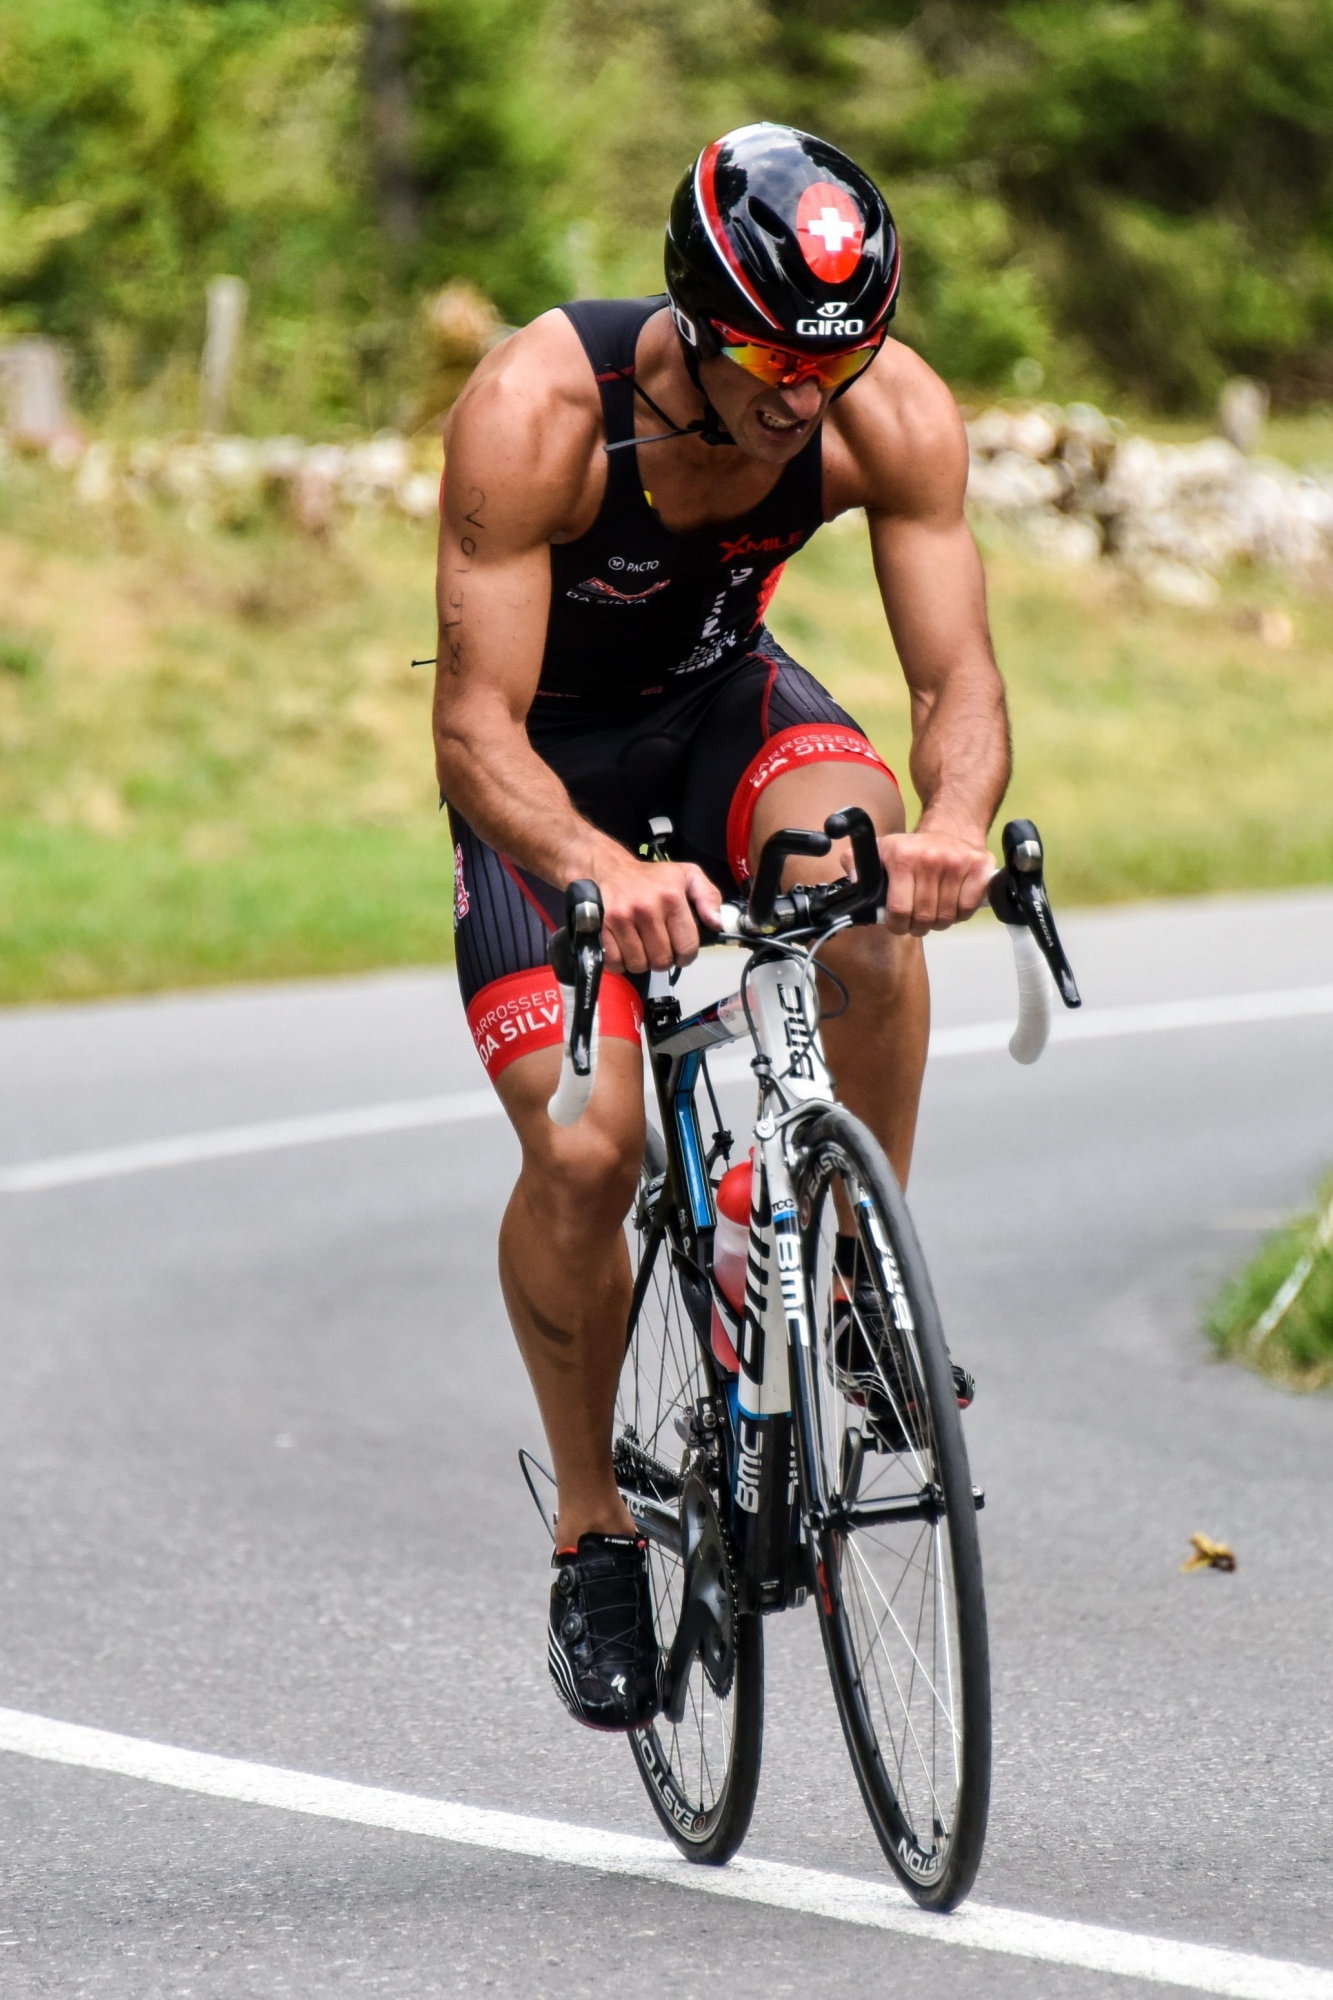 Triathlon. Ici Ricardo Senos

LA CHAUX-DE-FONDS 28 08 2016
Photo: Christian Galley LA CHAUX-DE-FONDS